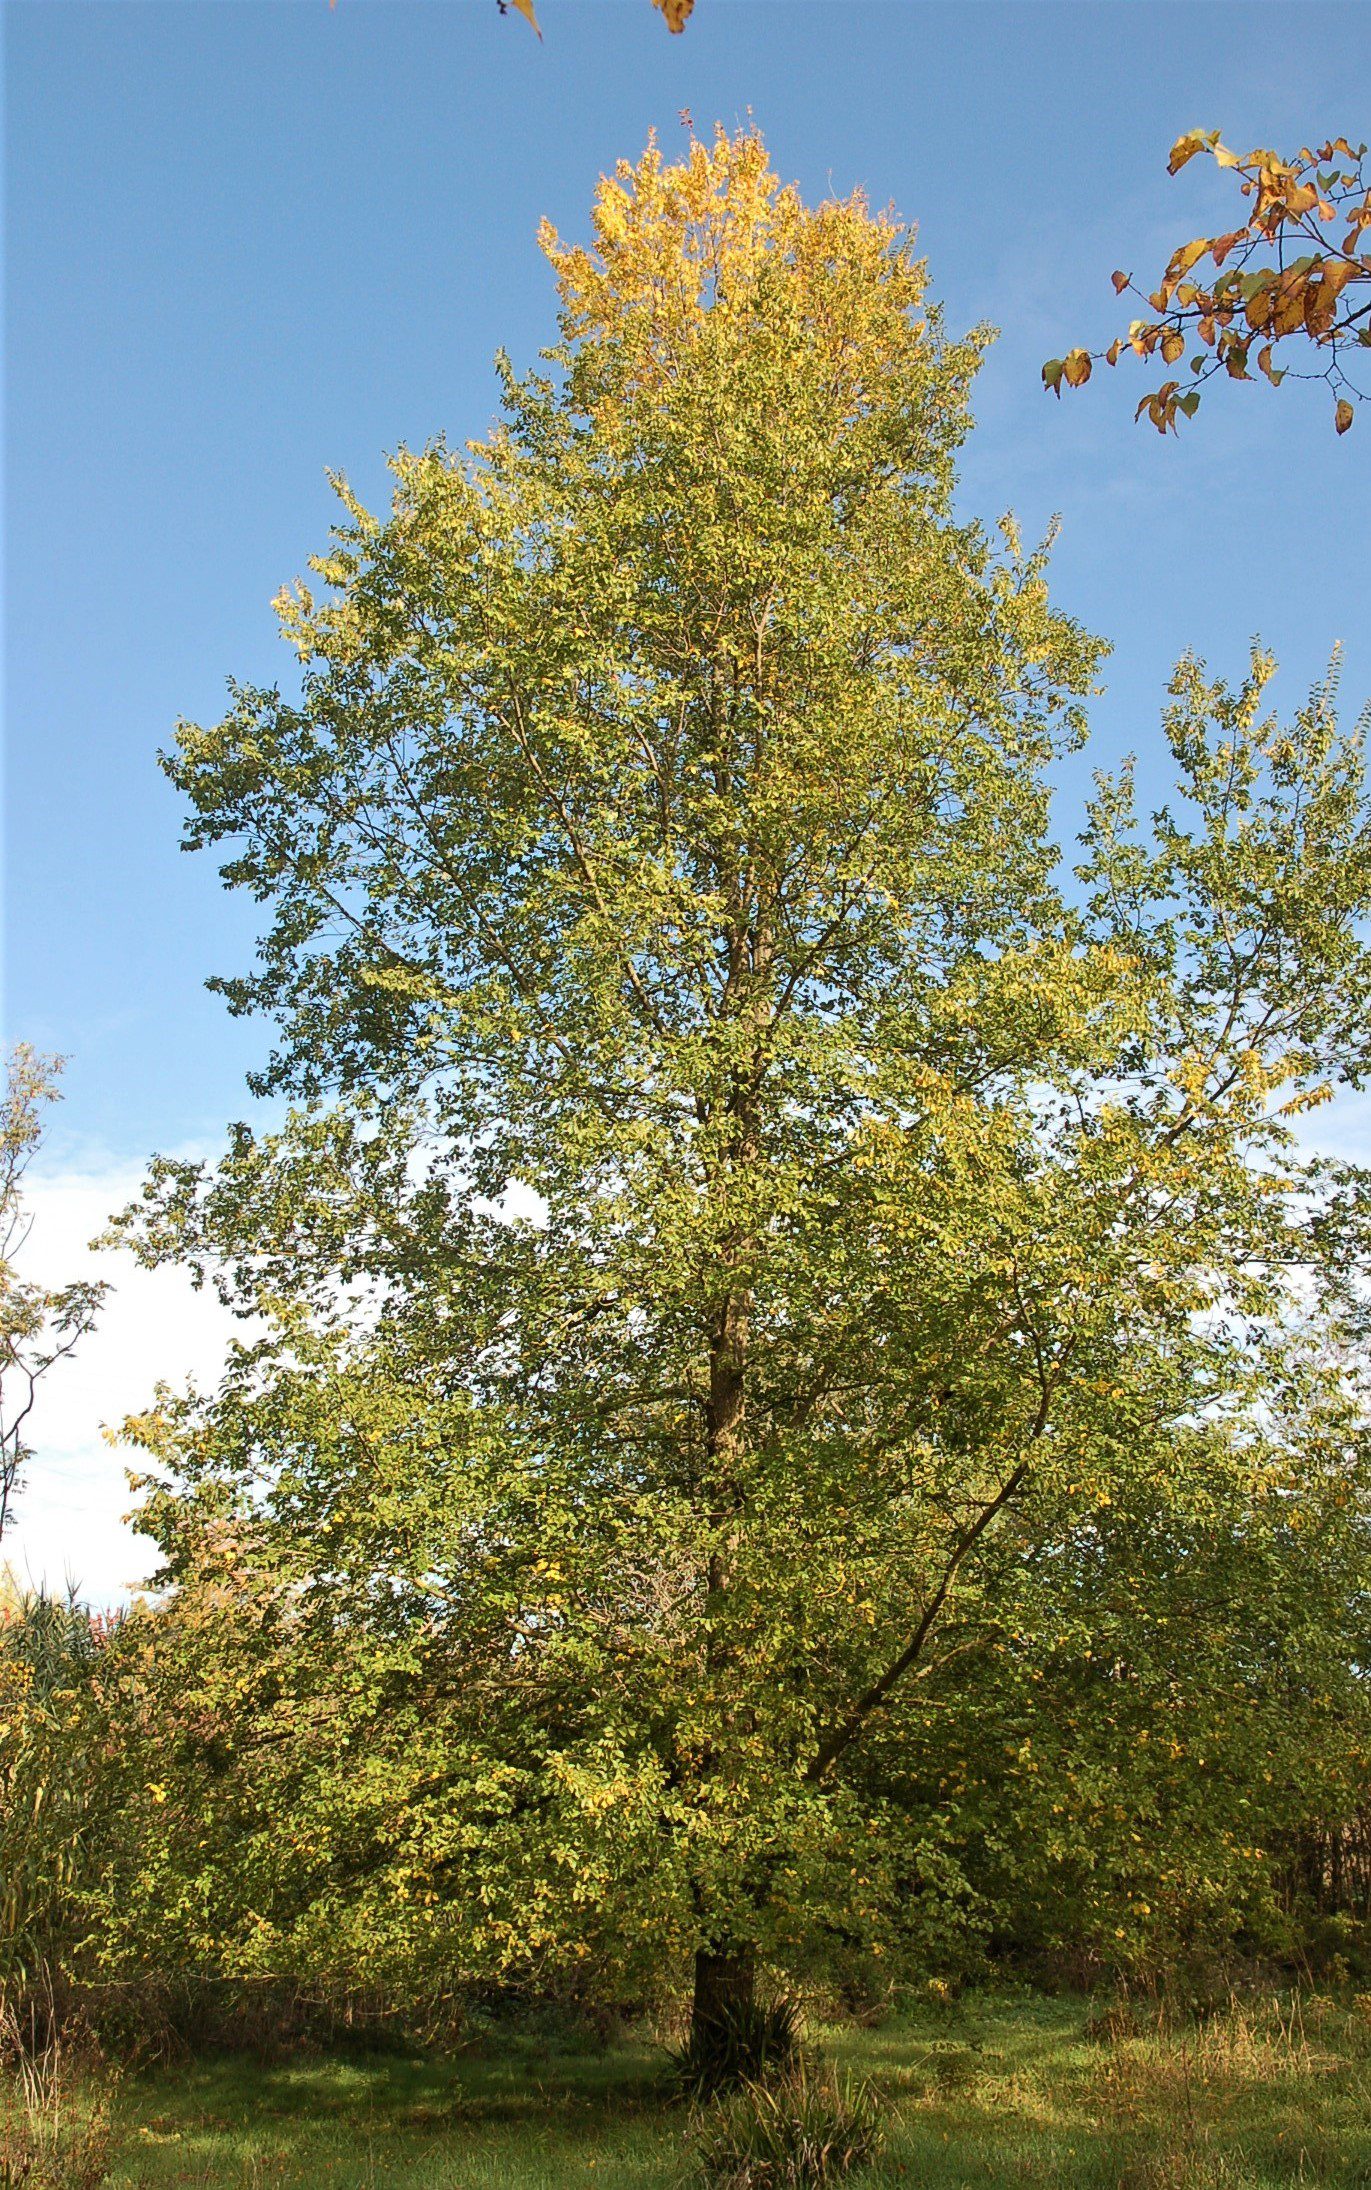 Ulmus fiorente mature elm tree growing in field